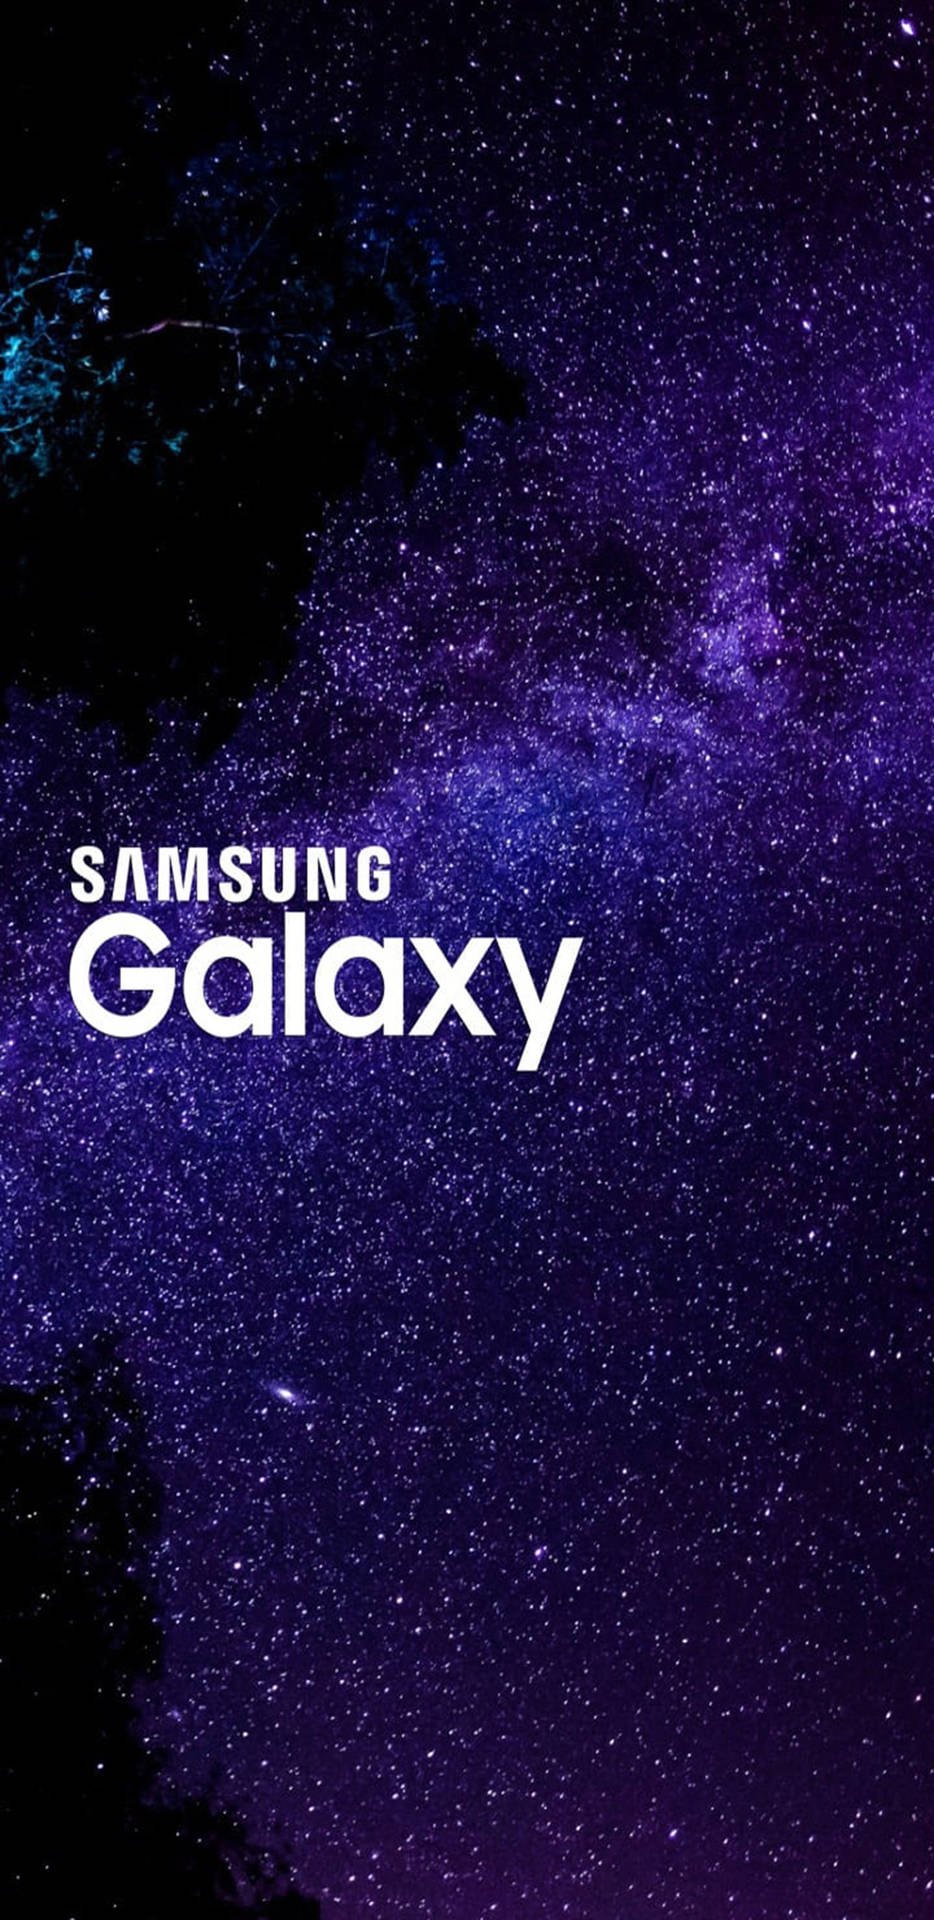 Samsung galaxy wallpaper - Galaxy